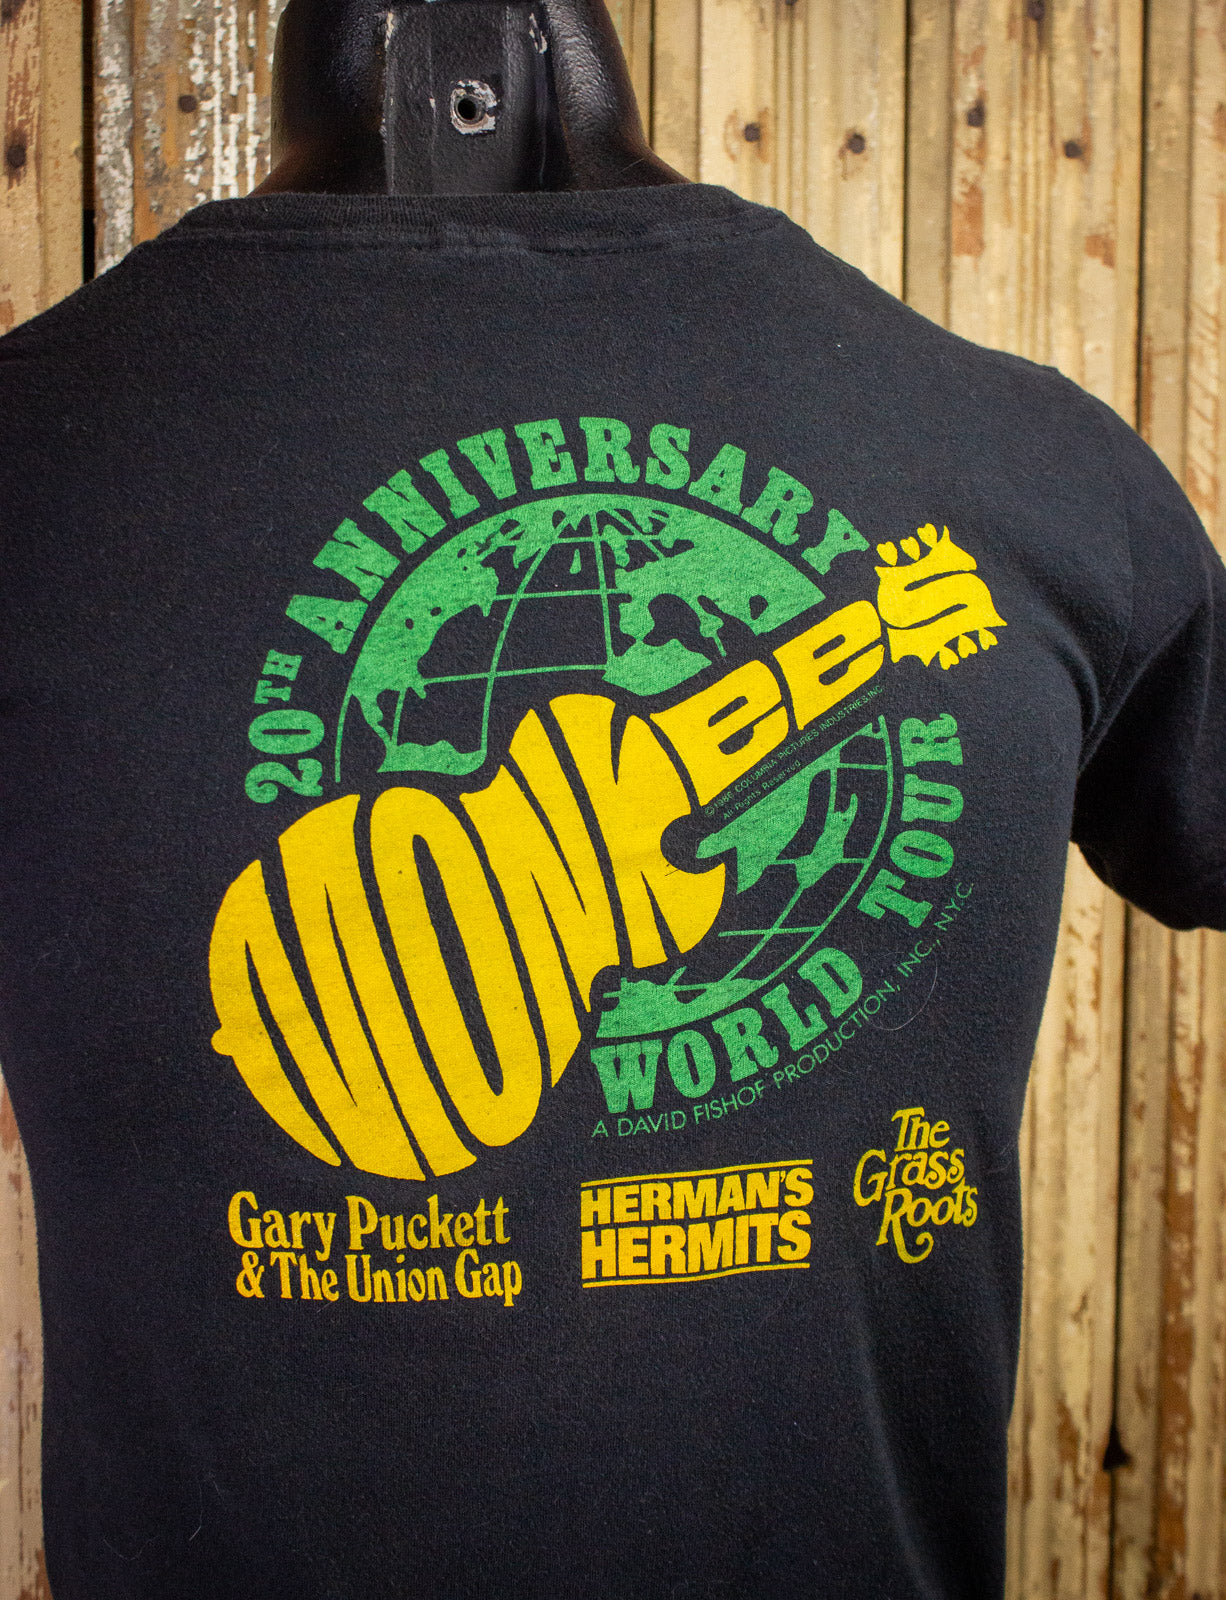 Vintage The Monkees 20th Anniversary Concert T Shirt 1986 Medium